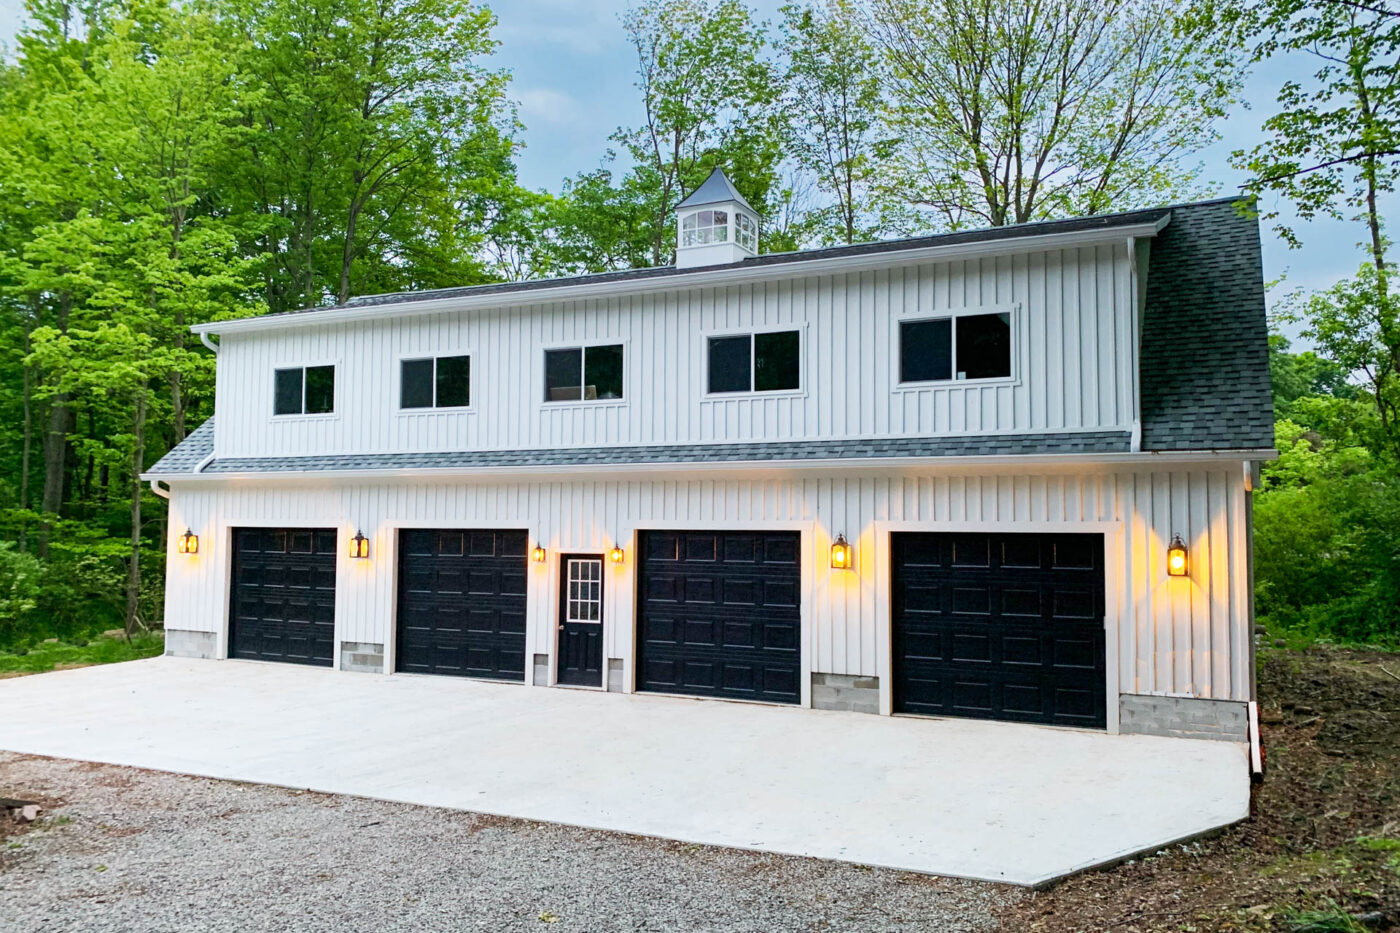 4 Car Garages for sale in Chesapeake, VA